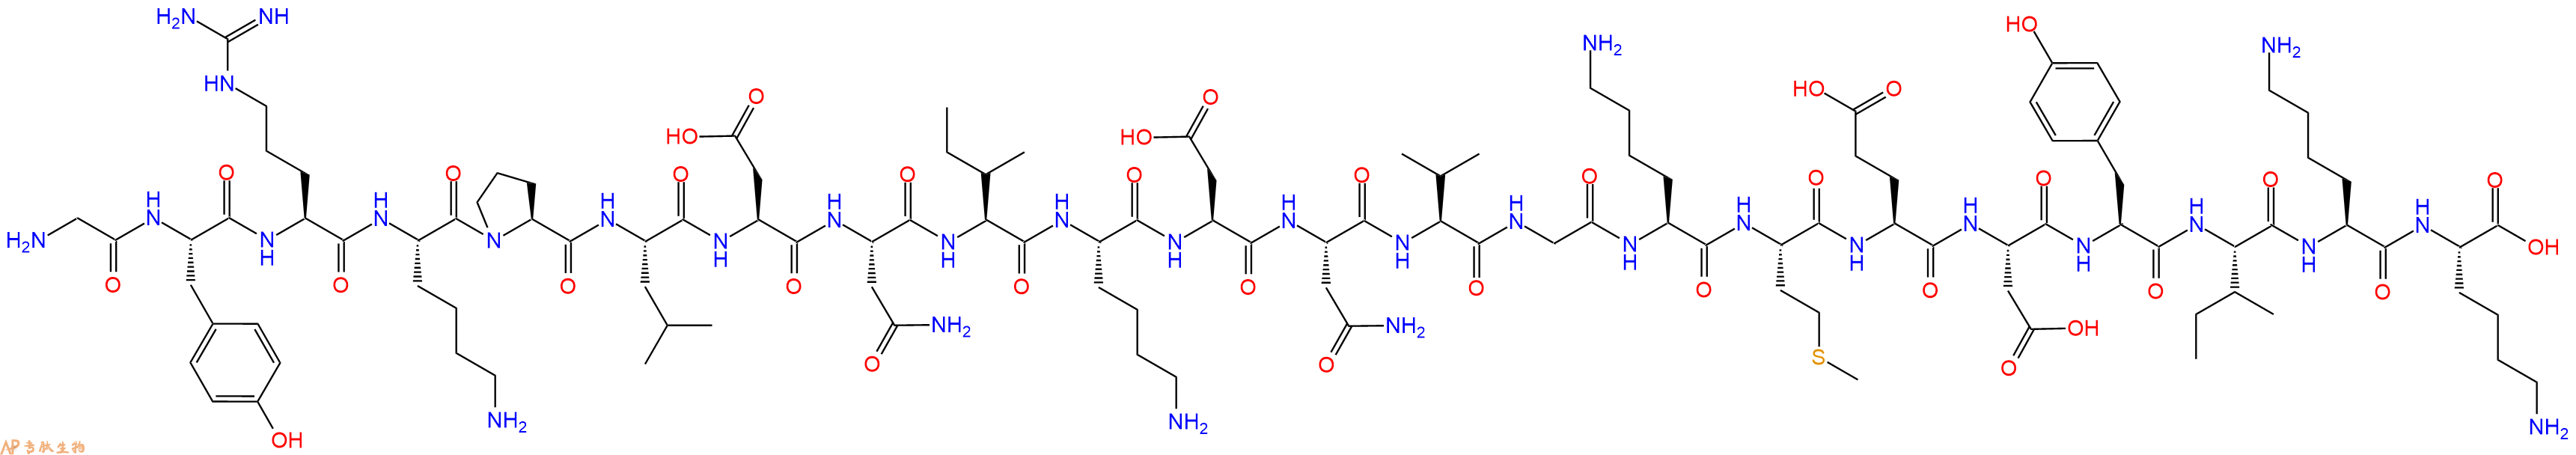 专肽生物产品MSP - 1 P2, Malaria Merozoite Surface Peptide - 1